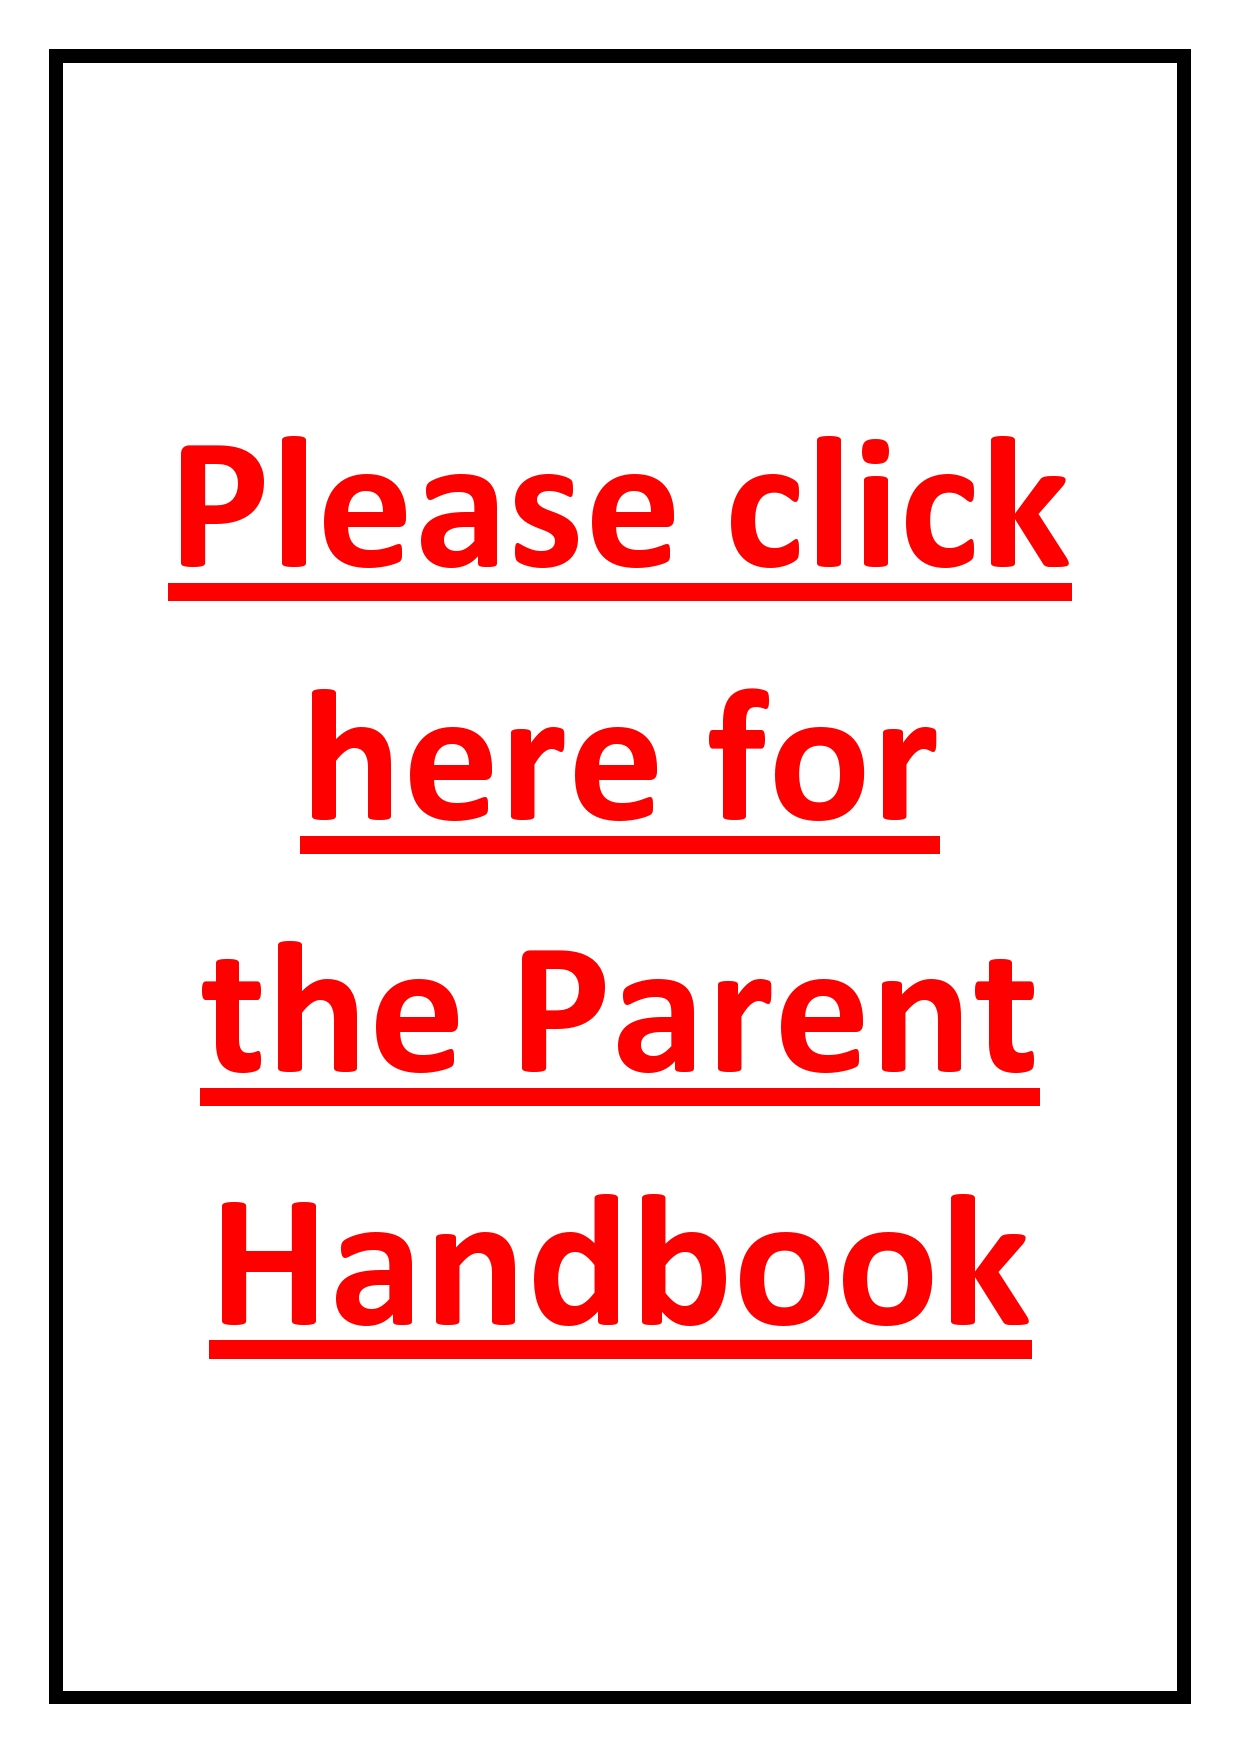 https://www.northwoodbroom.co.uk/images/COVID/New_Parent_Handbook_Image-page0001.jpg